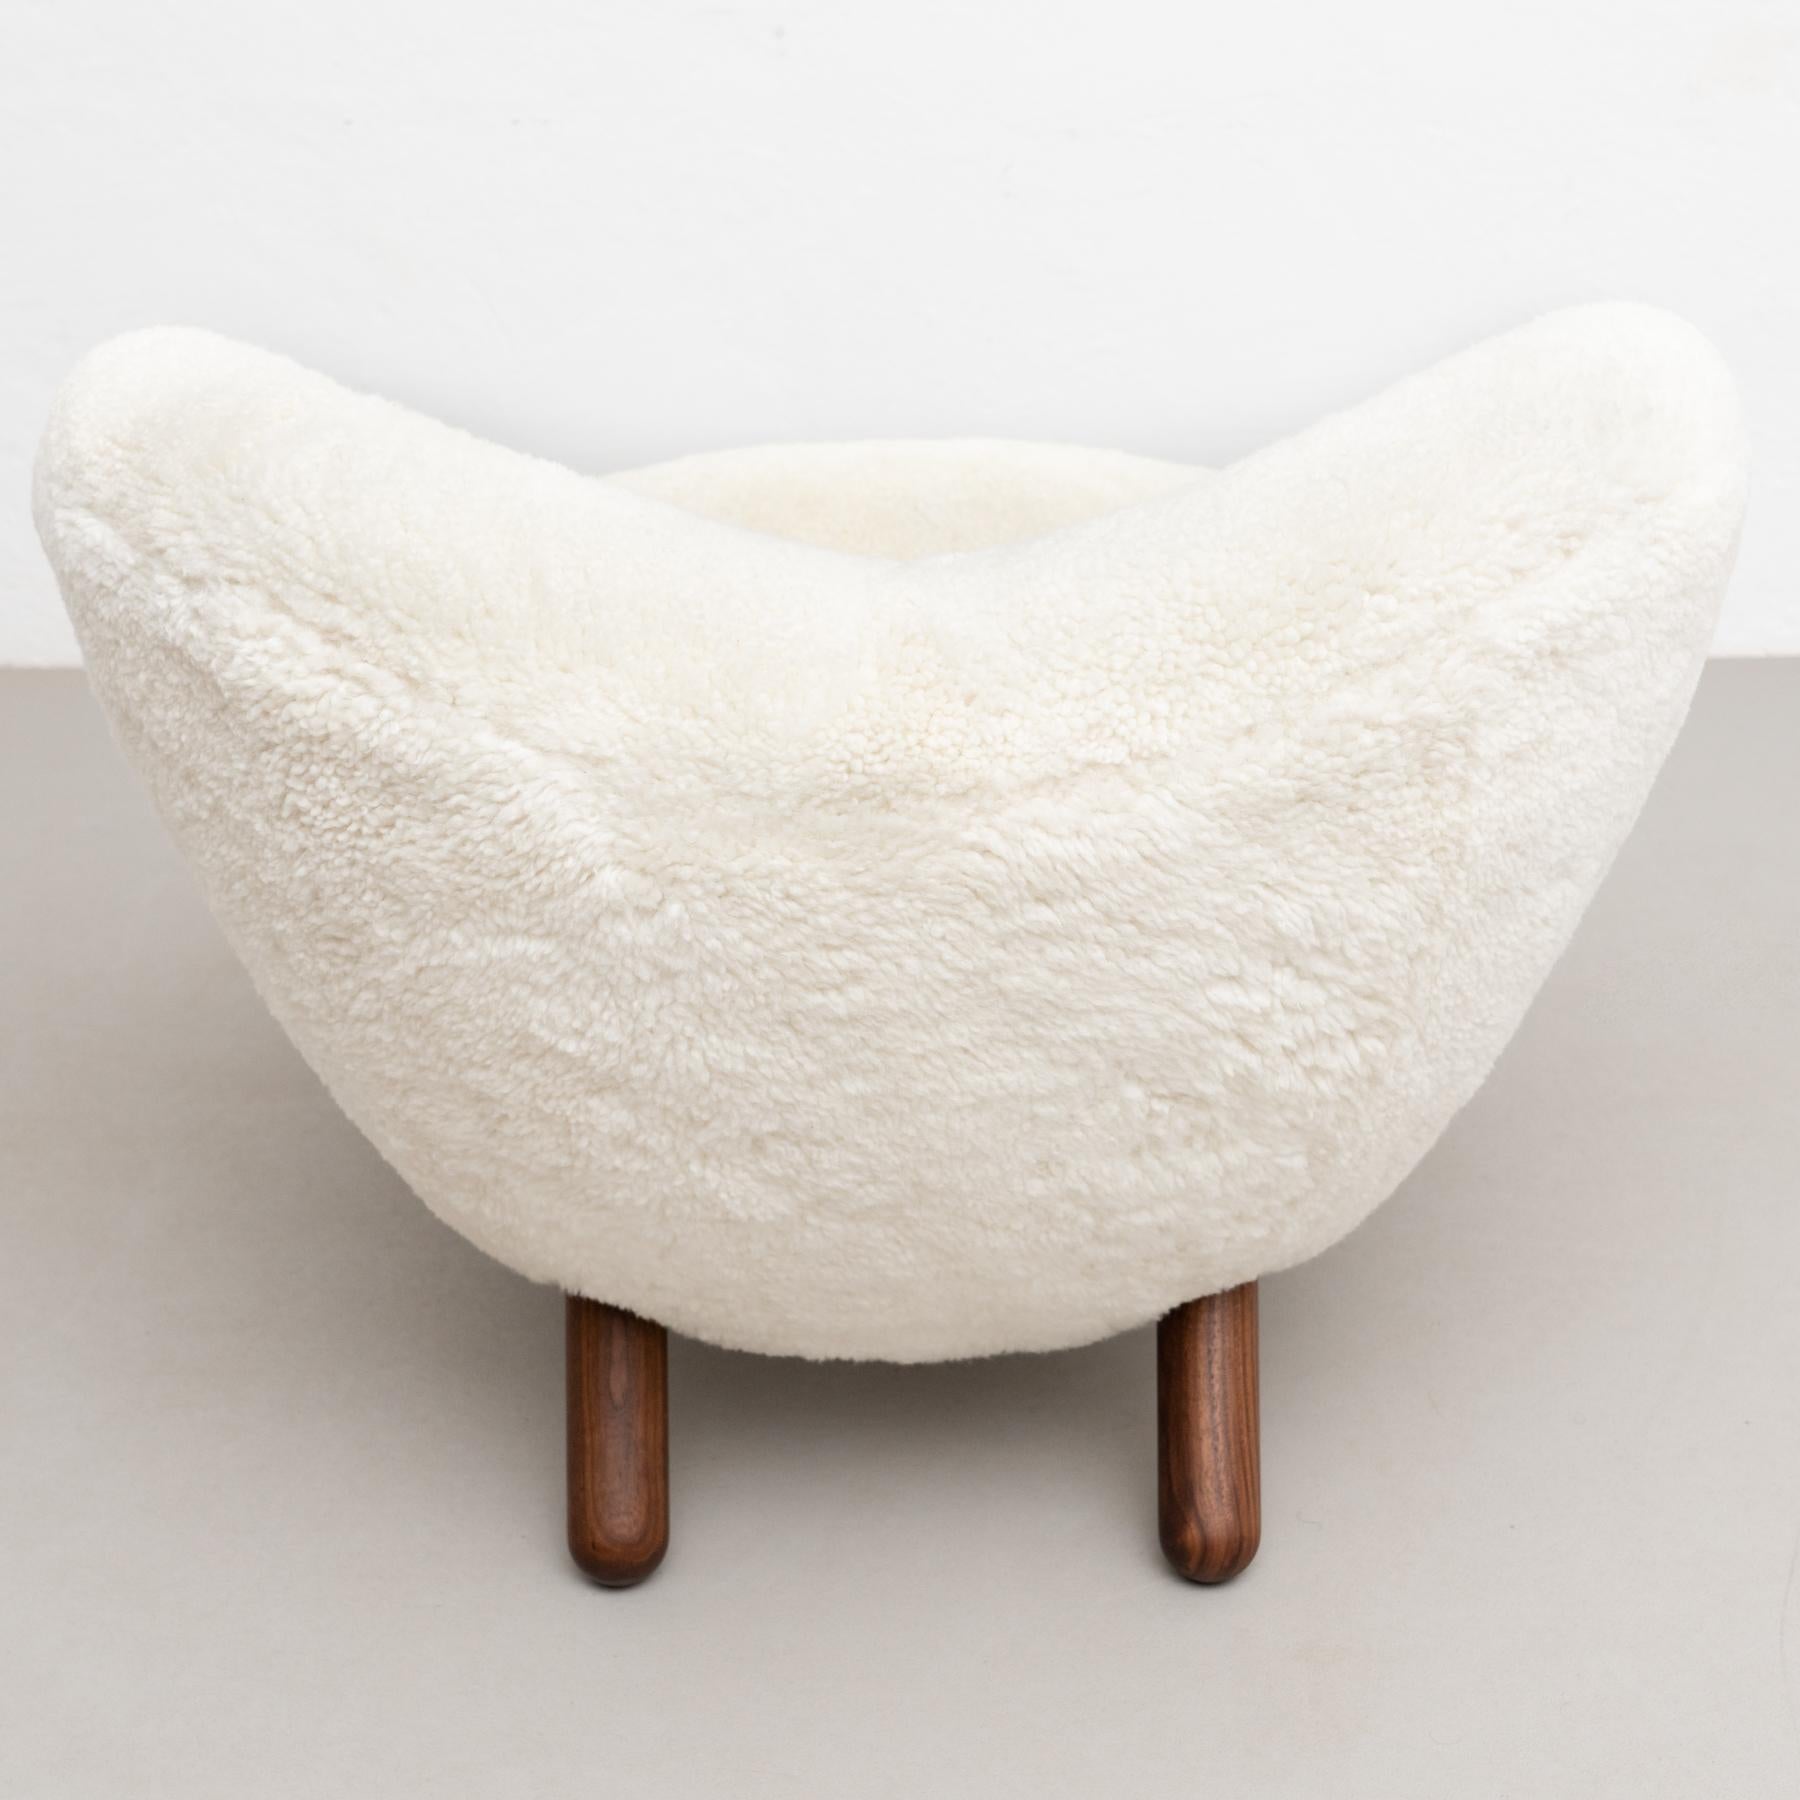 Bois Finn Juhl Pelican Chair Upholstered in Offwhite Sheepskin (Chaise Pélican recouverte de peau de mouton blanc cassé) en vente